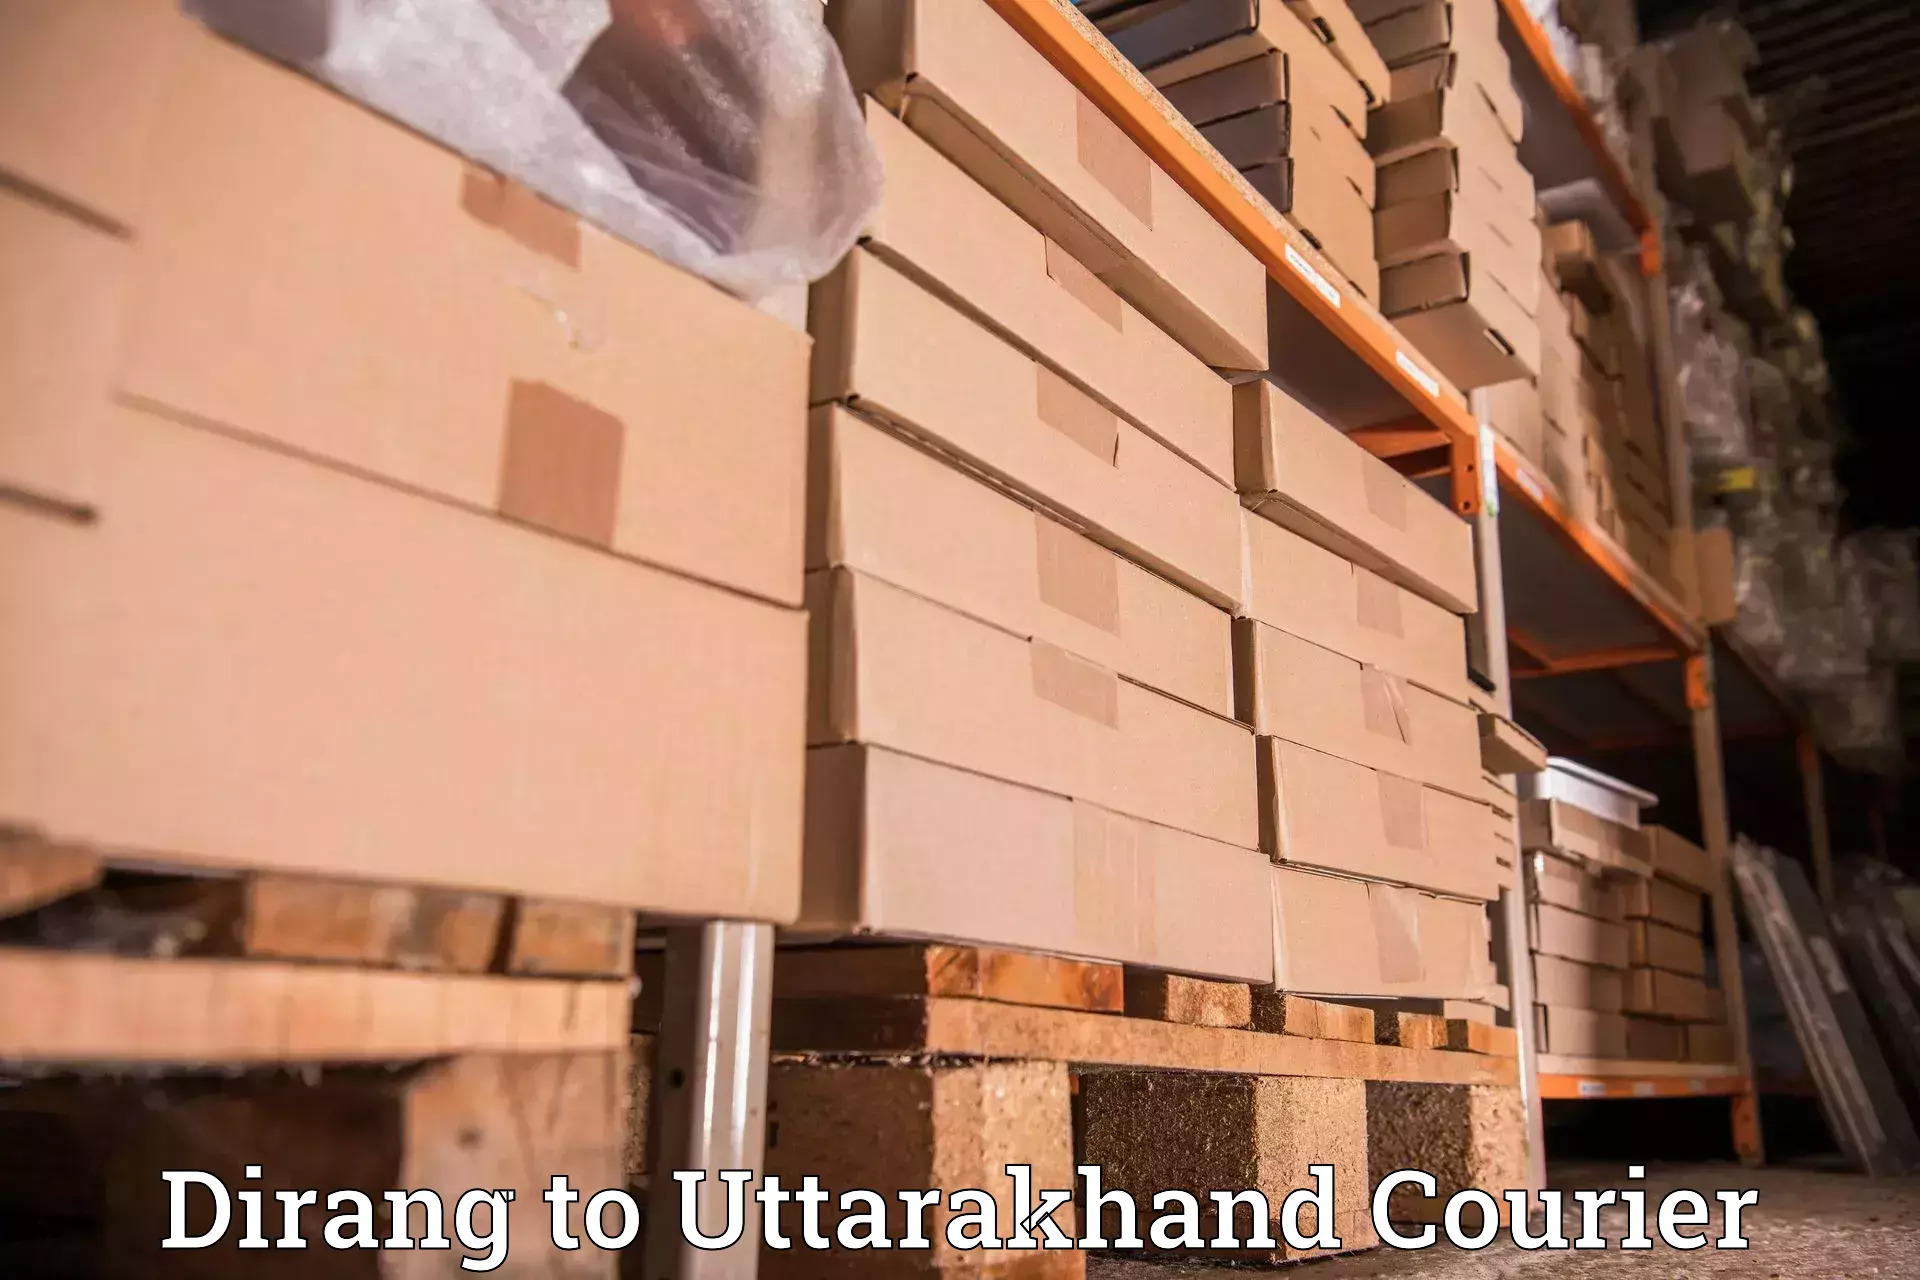 Courier service comparison Dirang to Udham Singh Nagar